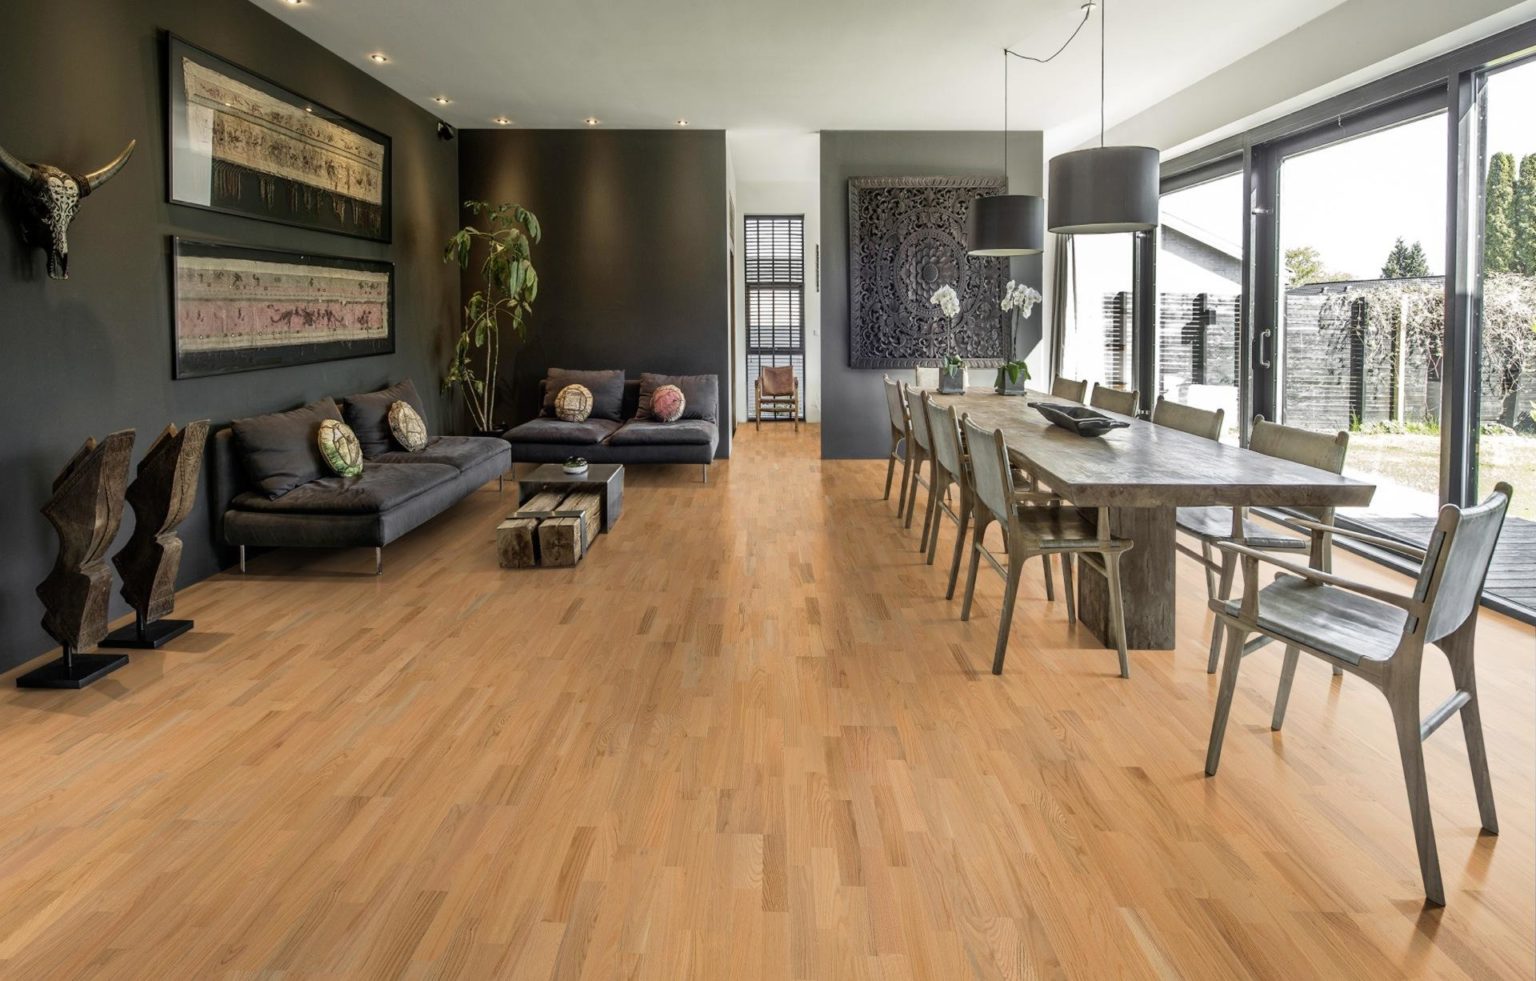 Gret Wood Floor Living Room Inspiration